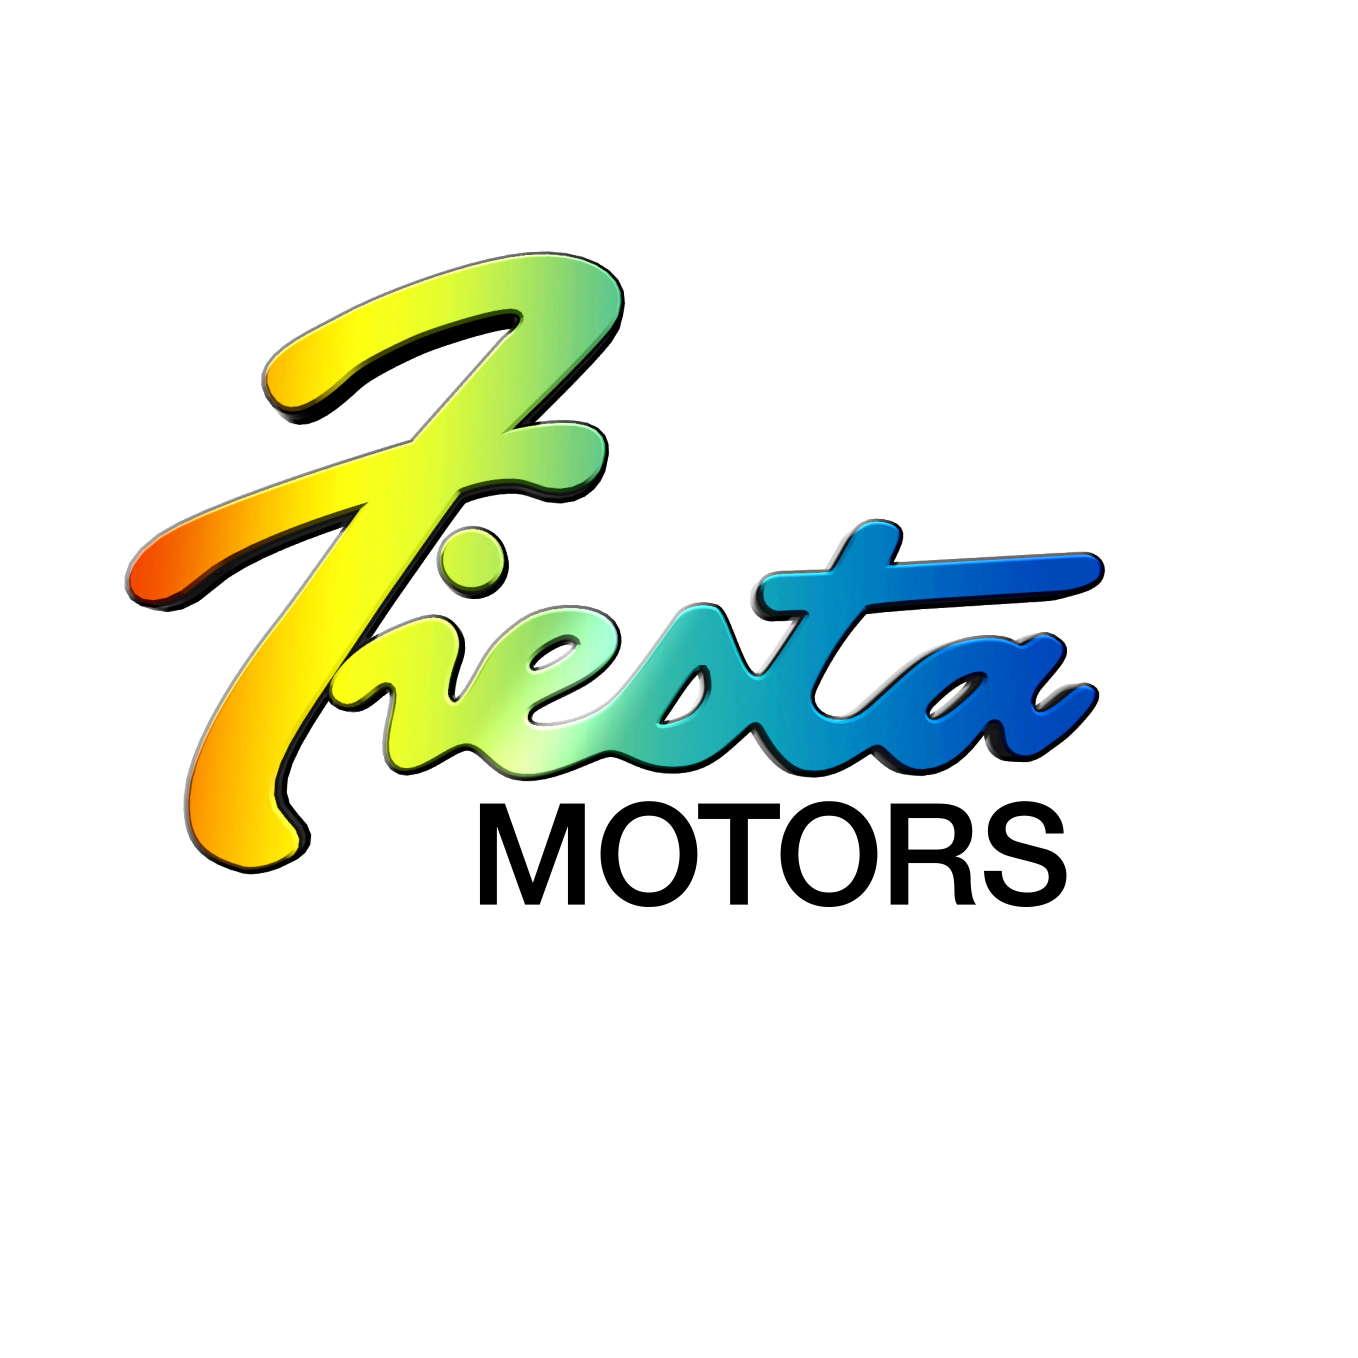 Fiesta Motors Logo